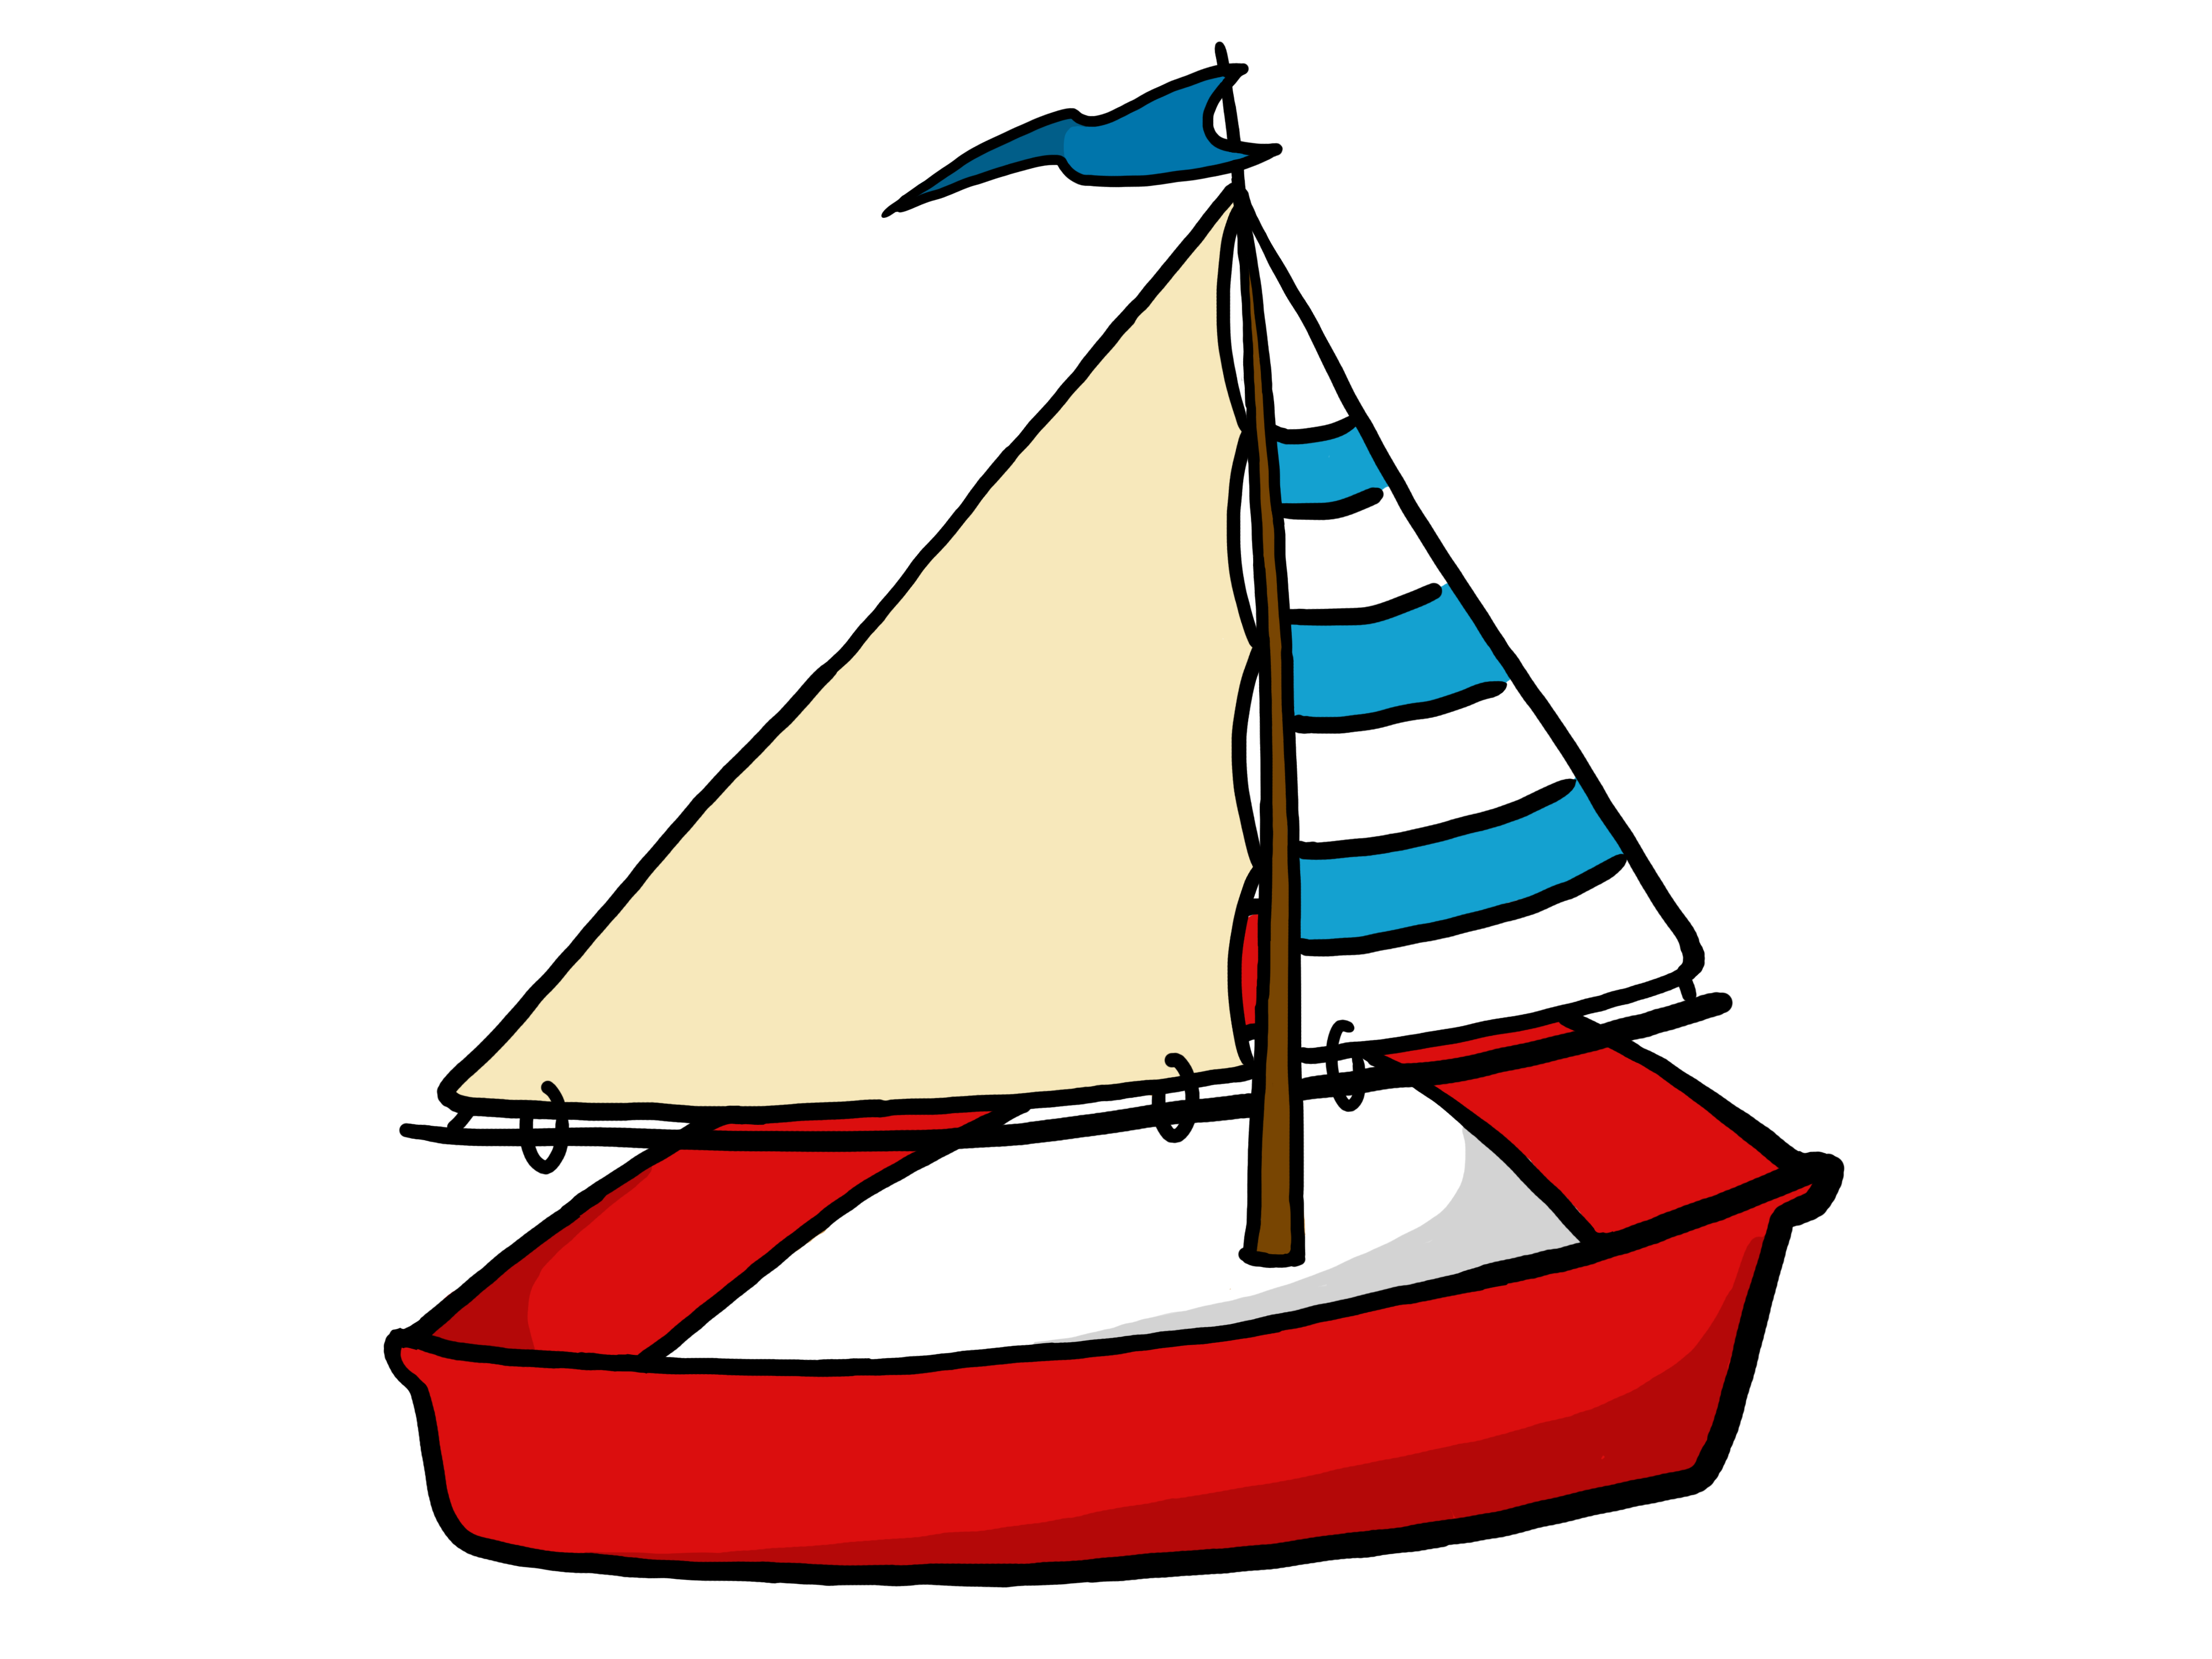 Yacht clipart and illustratio